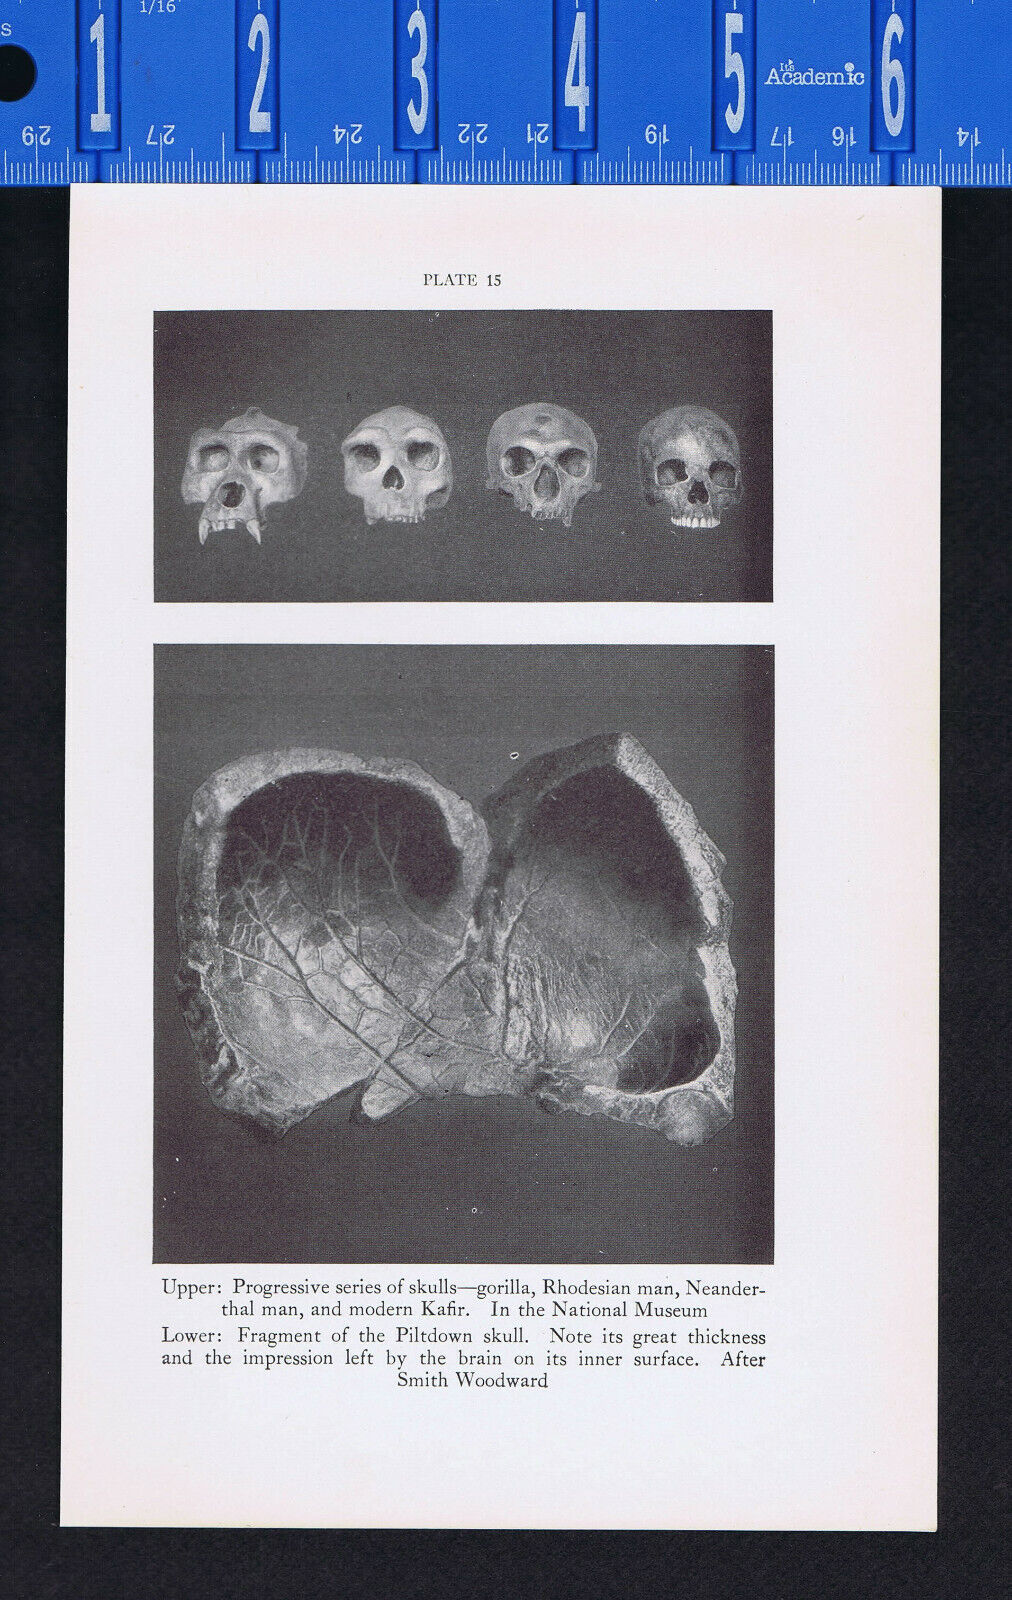 Skulls: Gorilla, Rhodesian man, Neanderthal, Kafir & Cave of Gargas Art -1934 